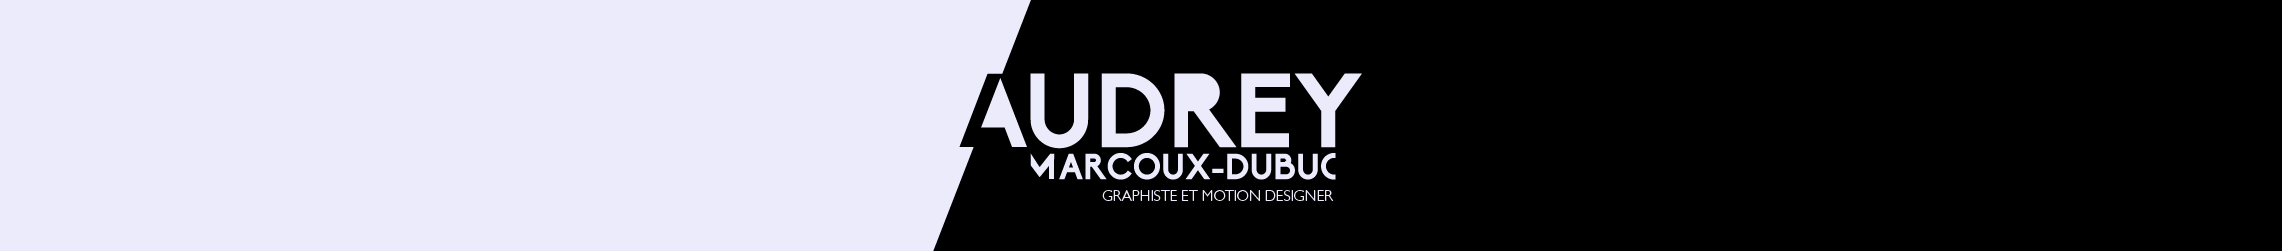 Profielbanner van Audrey Marcoux-Dubuc